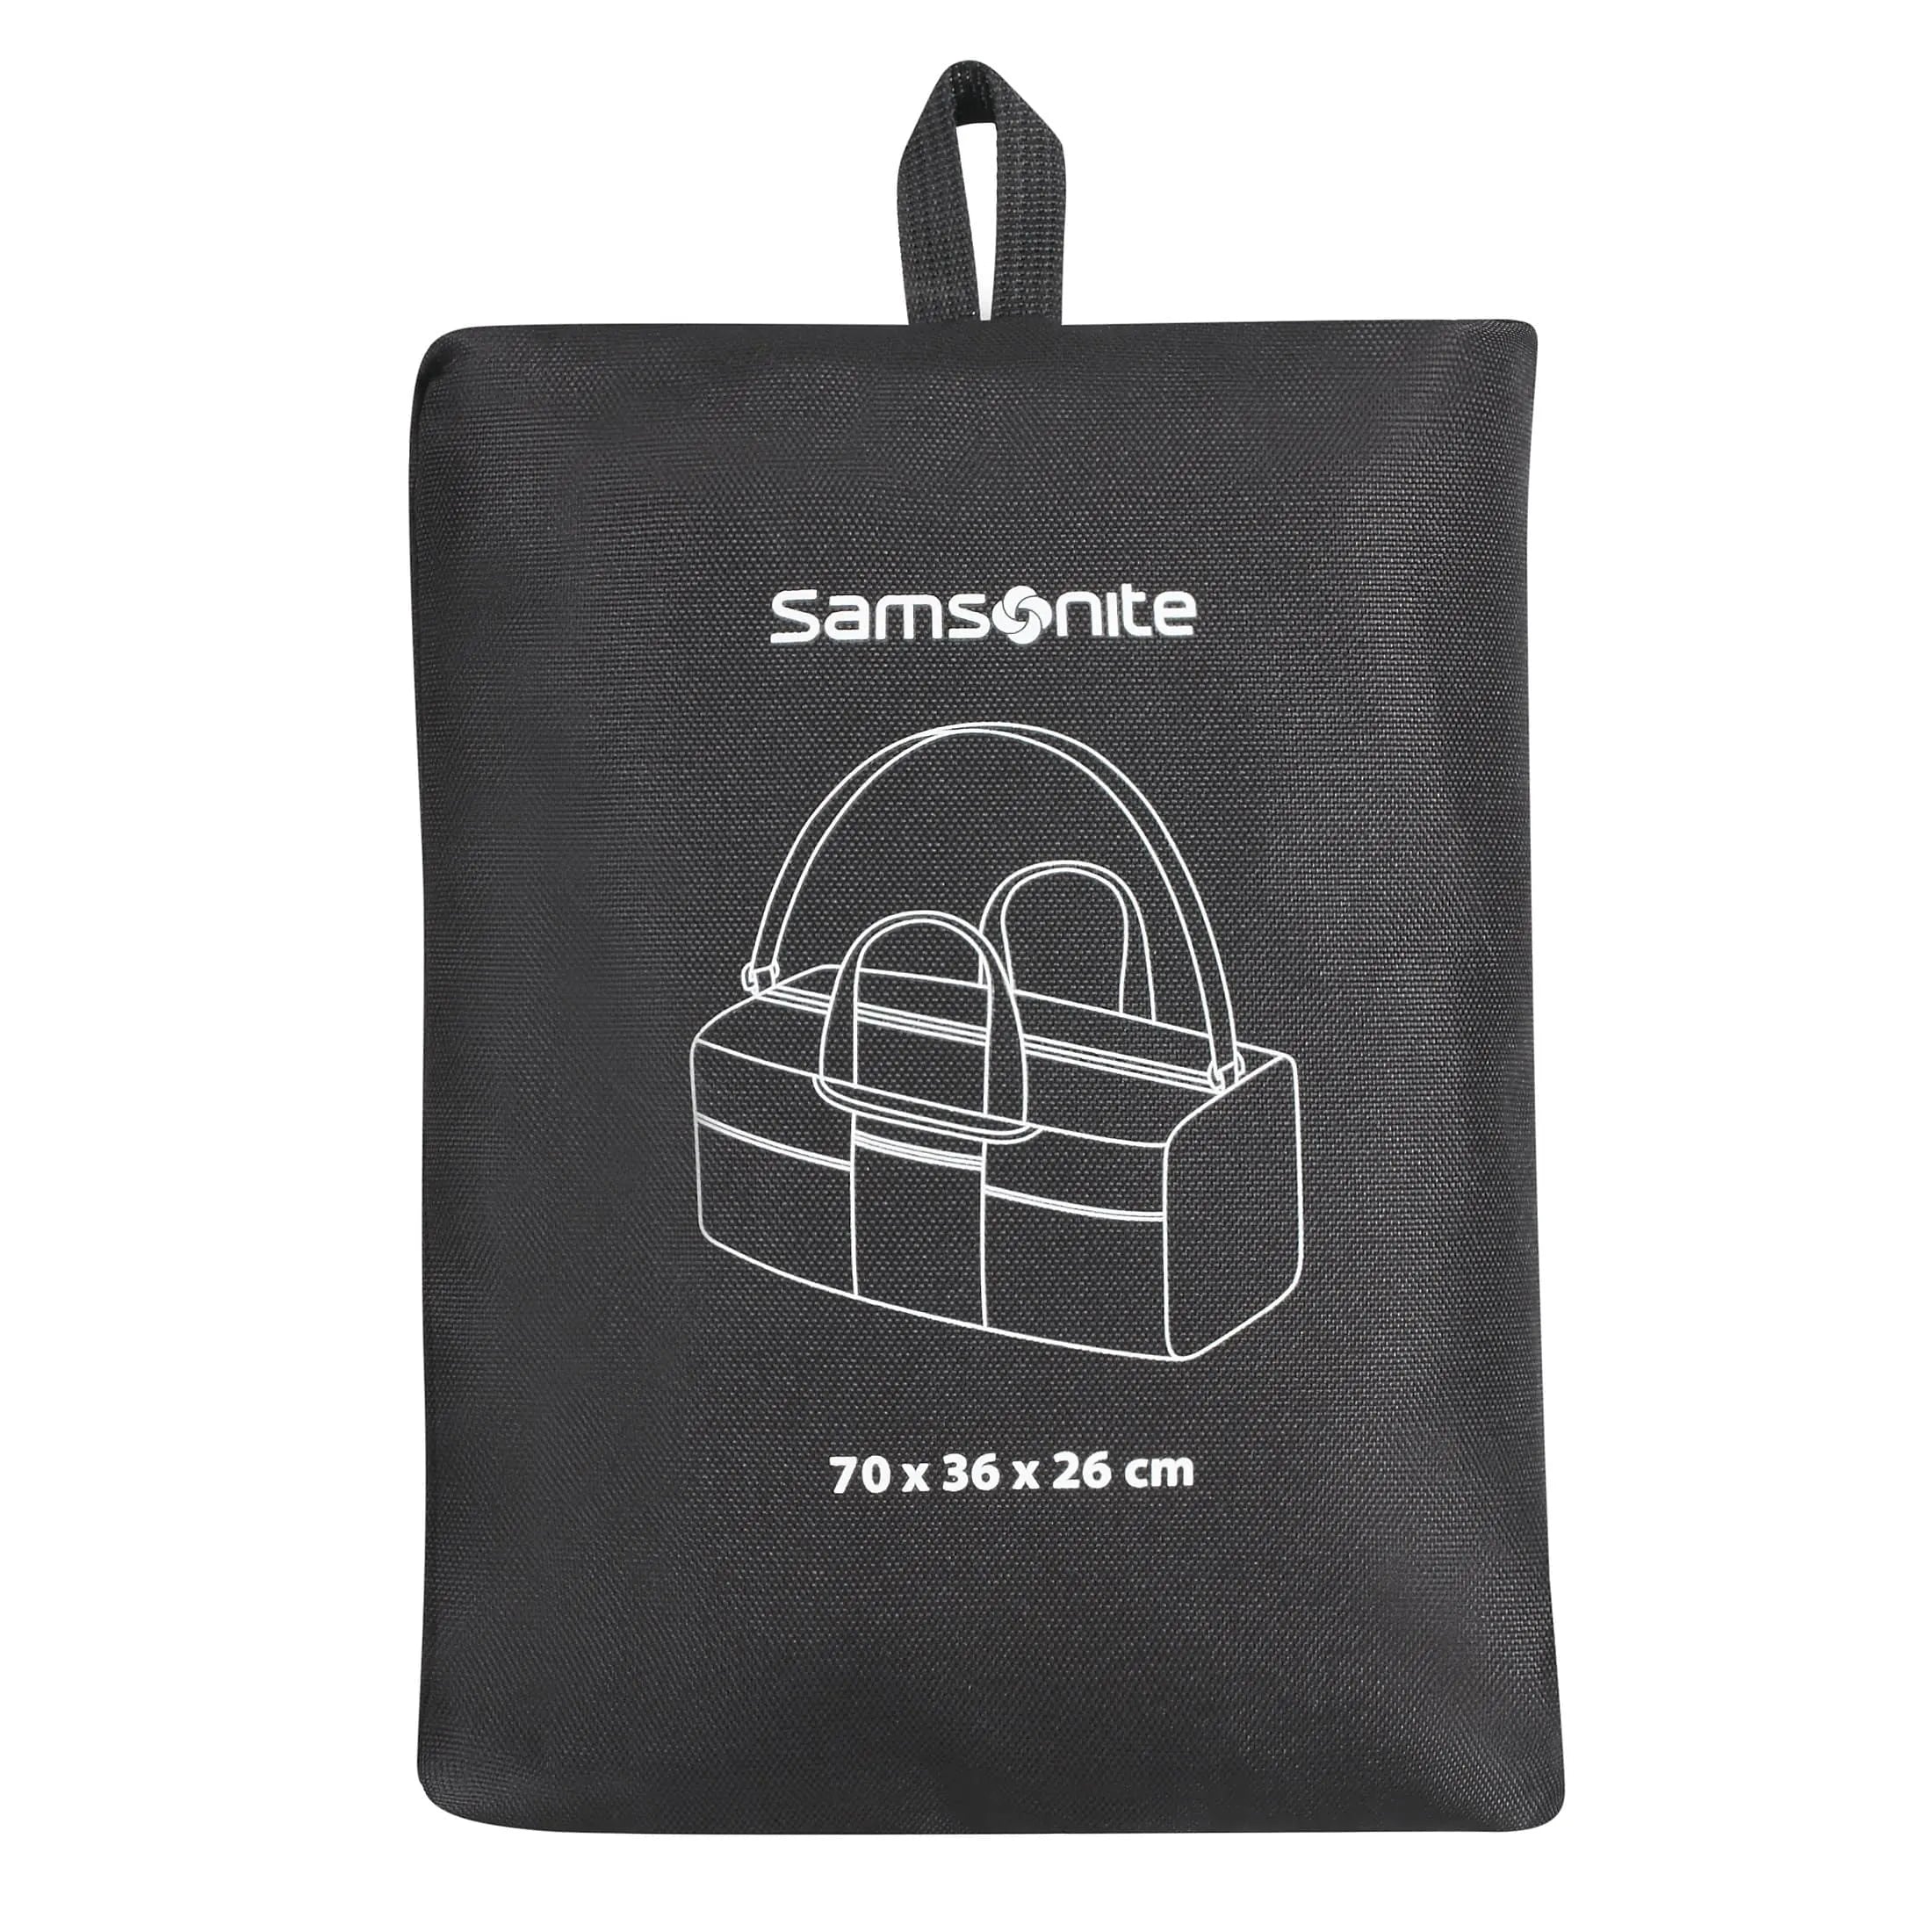 Samsonite Travel Accessories travel bag 70 cm - midnight blue